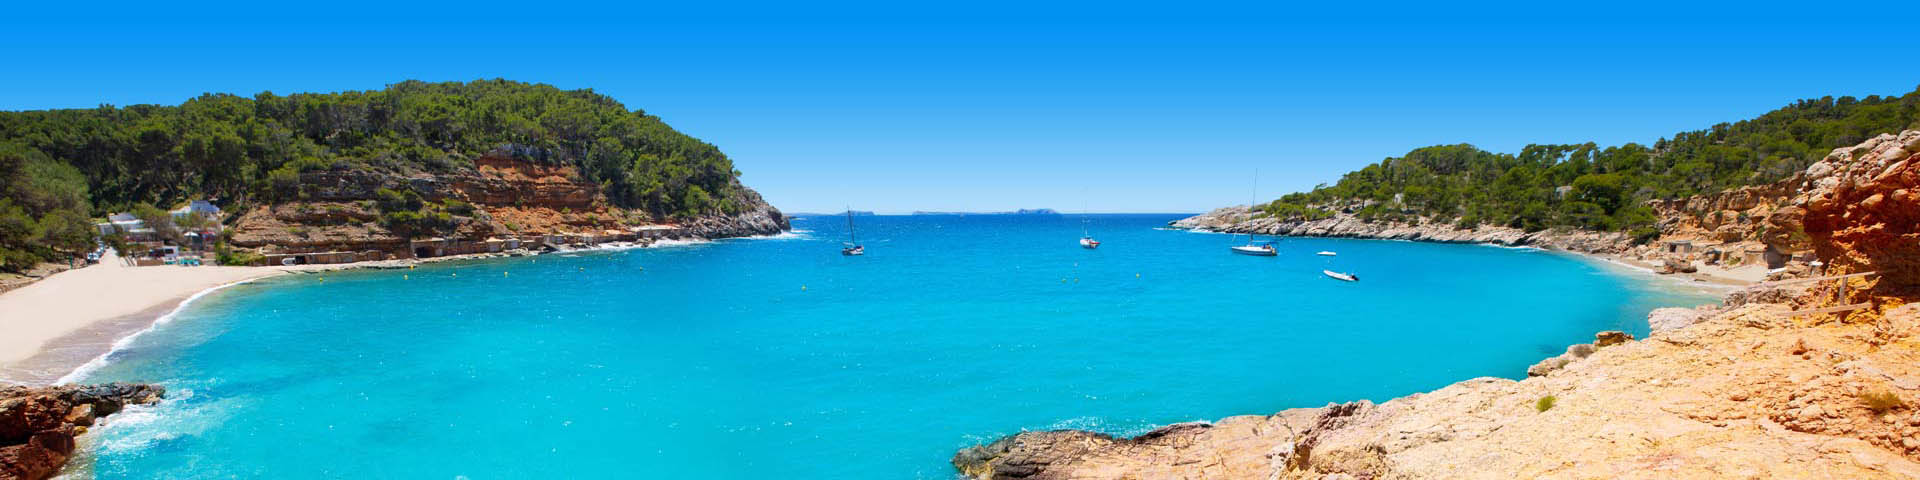 Strand bij Ibiza Cala Salada